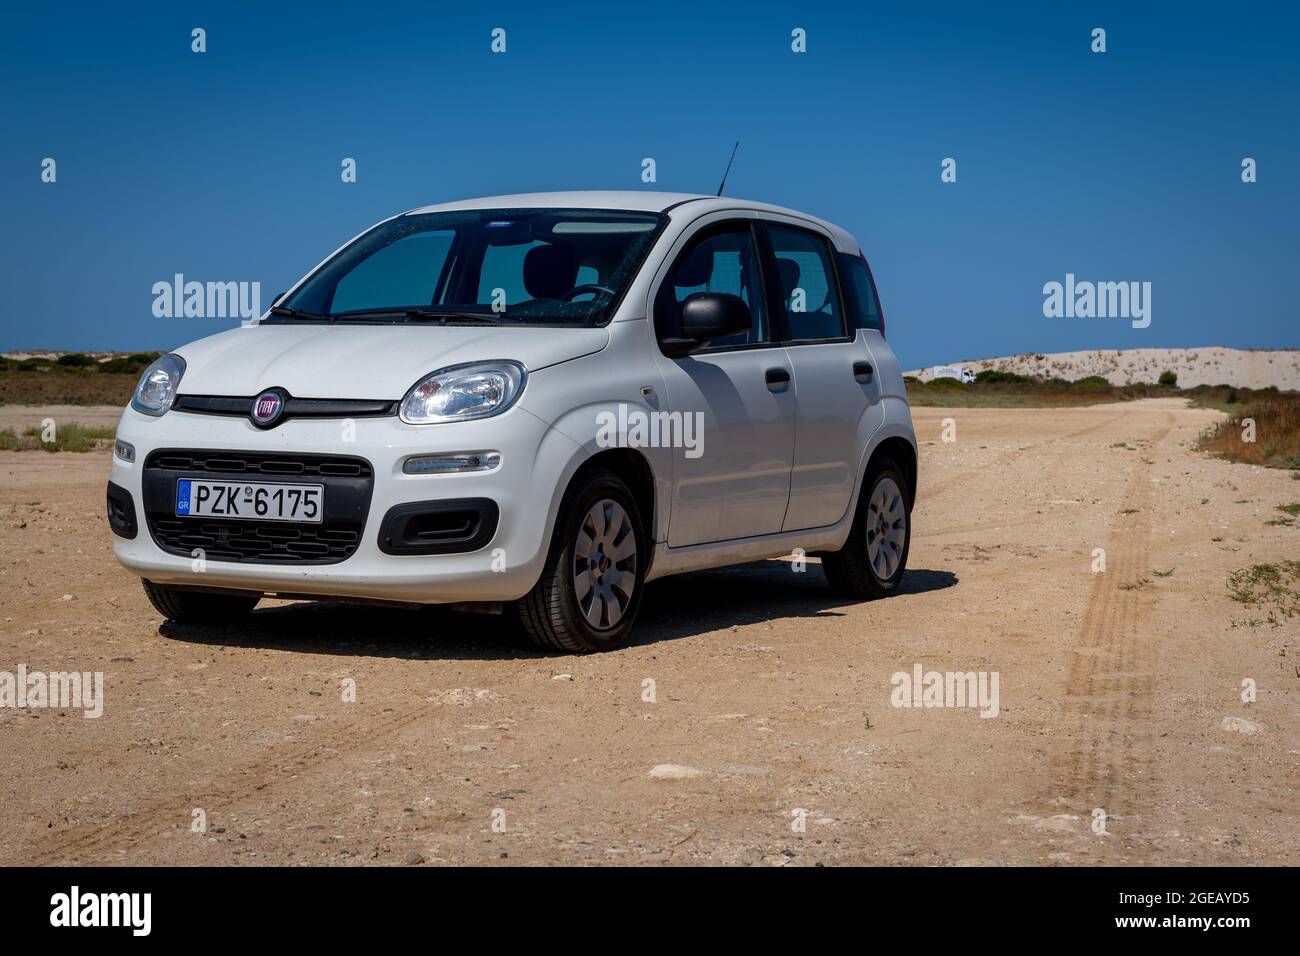 Fiat panda hi-res stock photography and images - Alamy